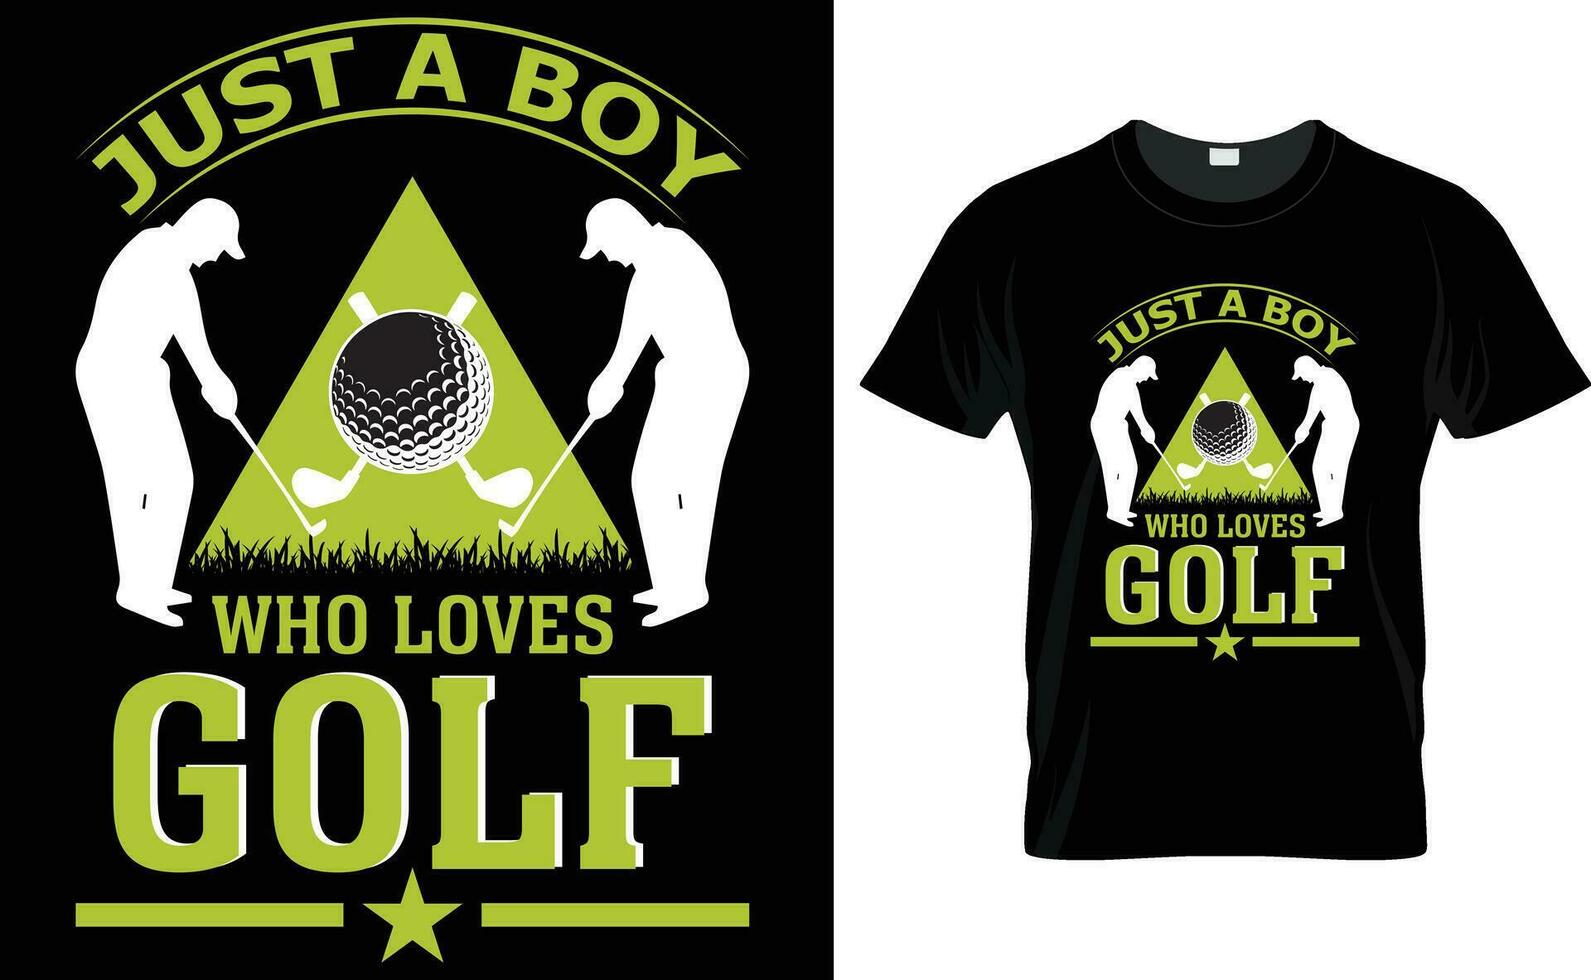 Just a boy who loves golf t shirt design, Golf t shirt design, Typography golf t shirt design, Vintage golf t shirt design,  Retro golf t-shirt design, vector illustrator.